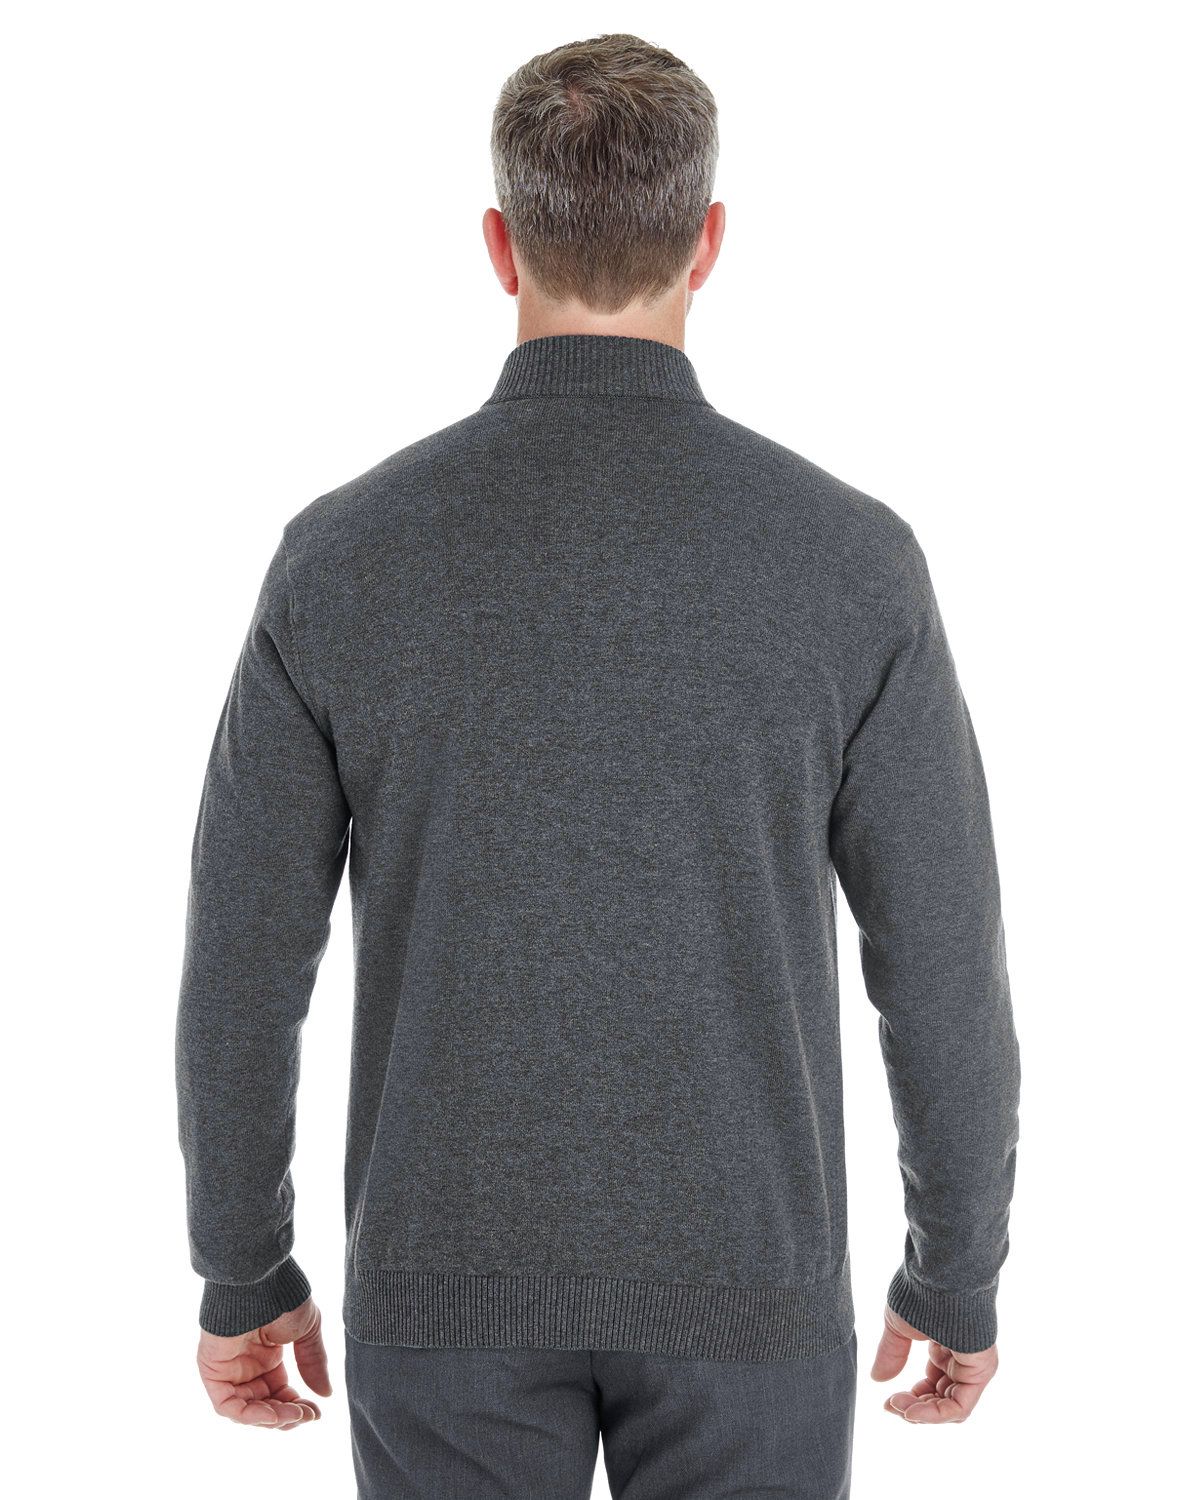 'Devon & Jones DG478 Men's Manchester Fully-Fashioned Quarter-Zip Sweater'